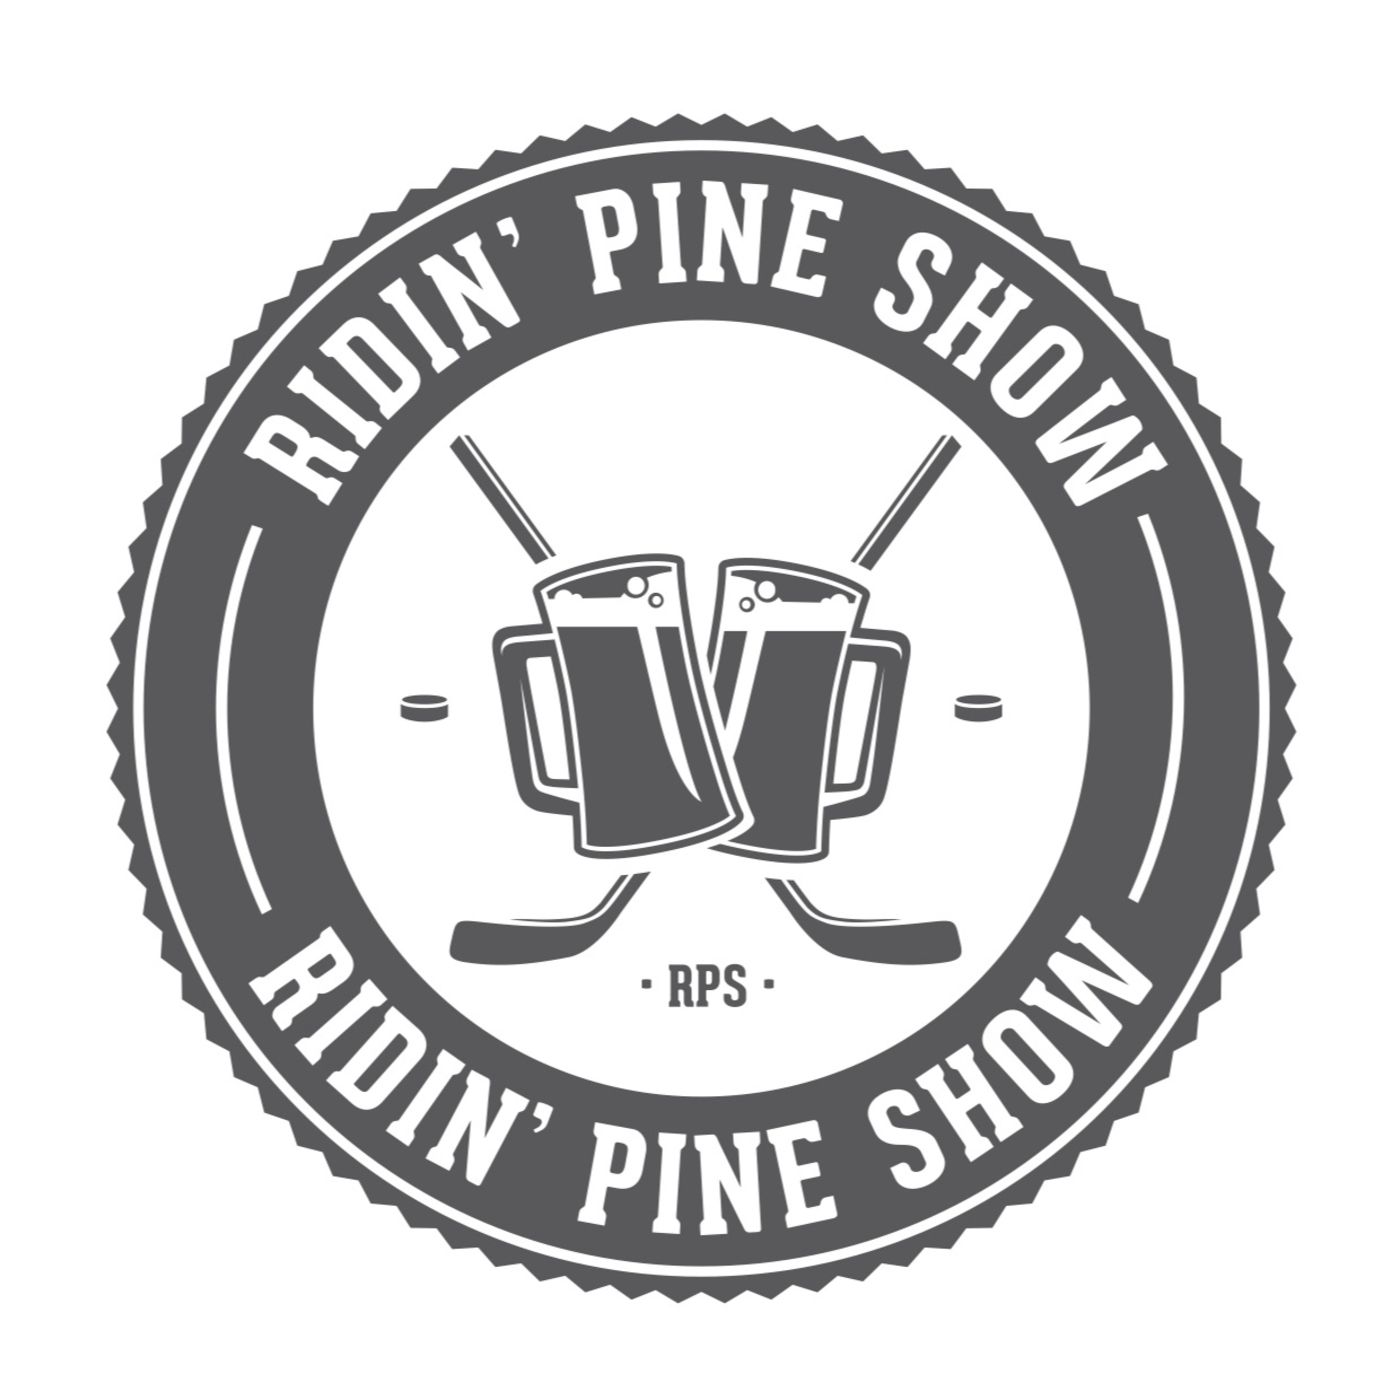 Ridin' Pine Show